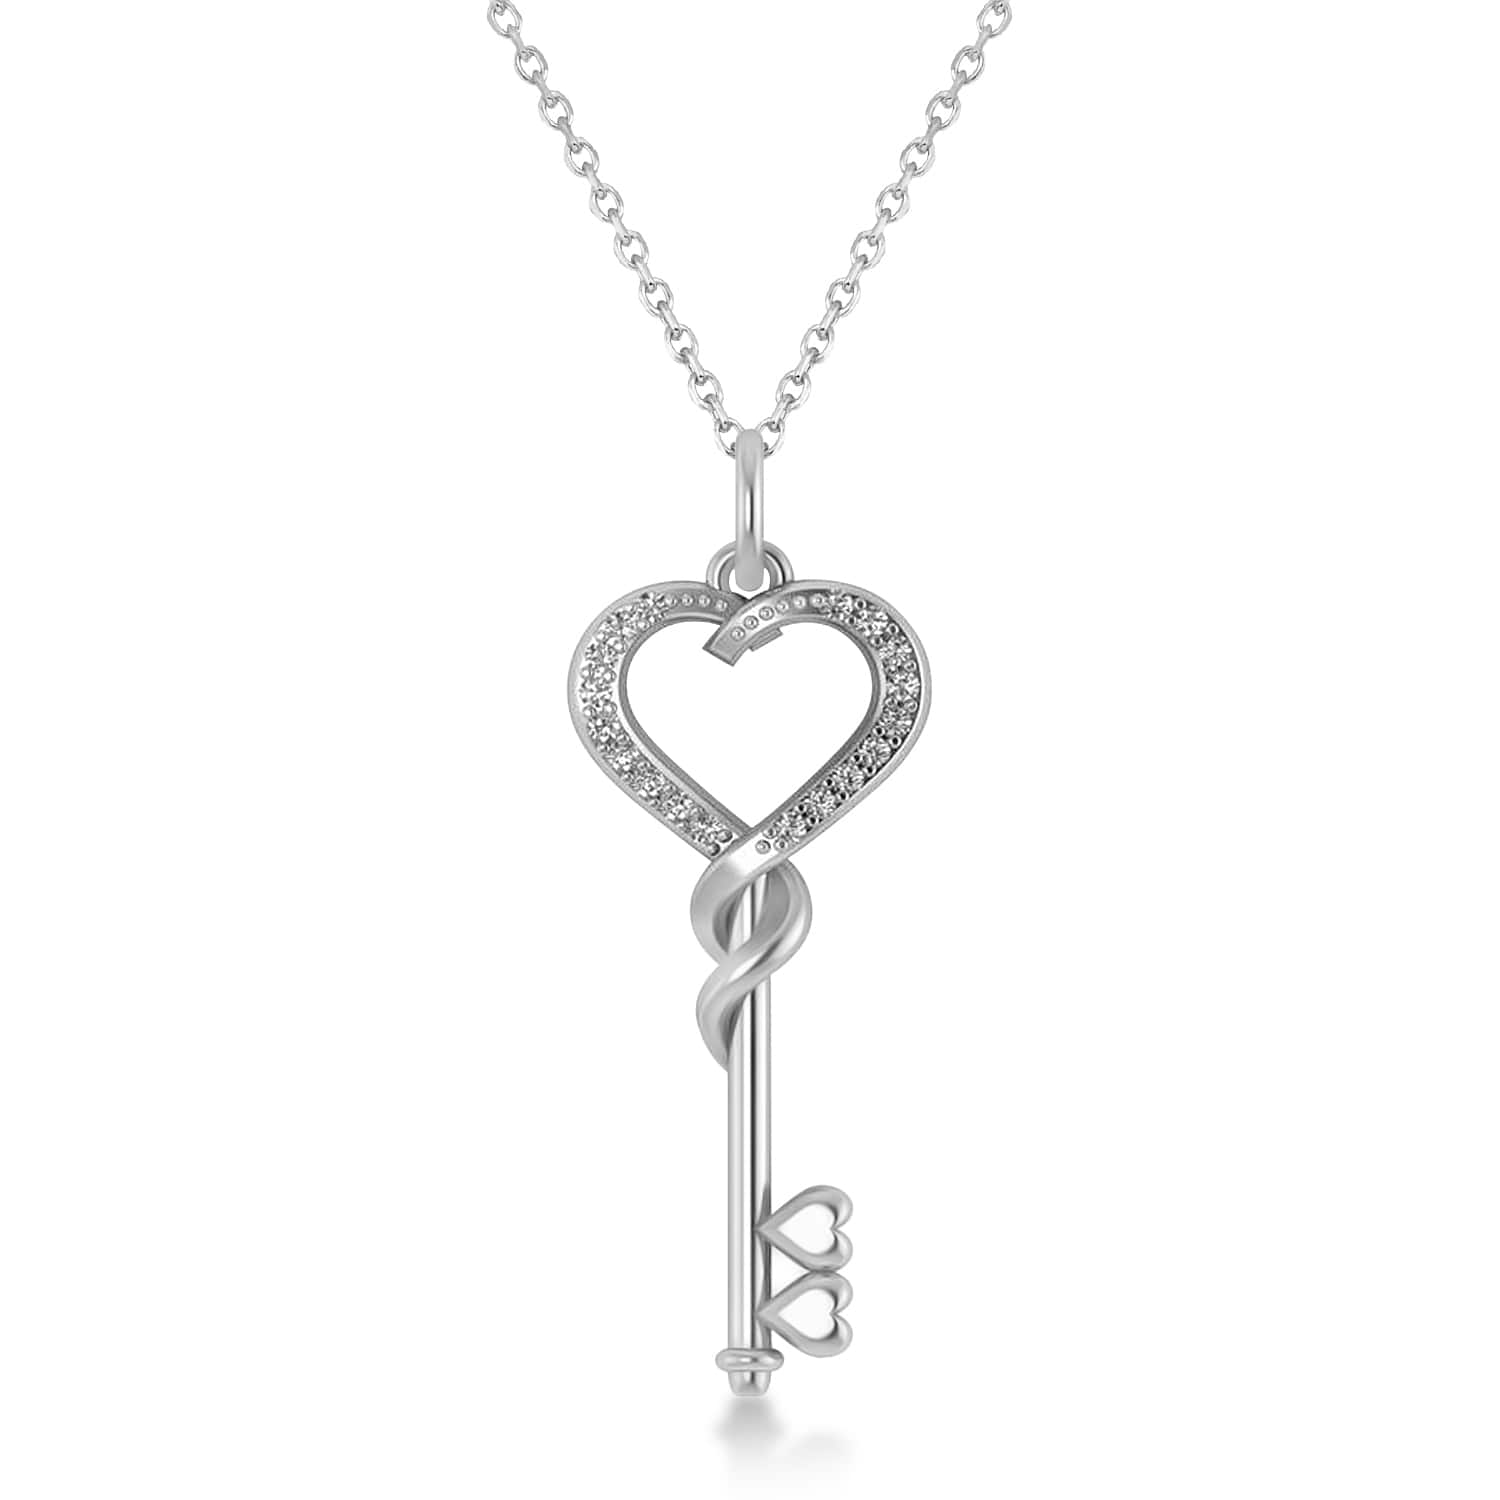 Diamond Heart Key Pendant Necklace 14k White Gold (0.18ct)